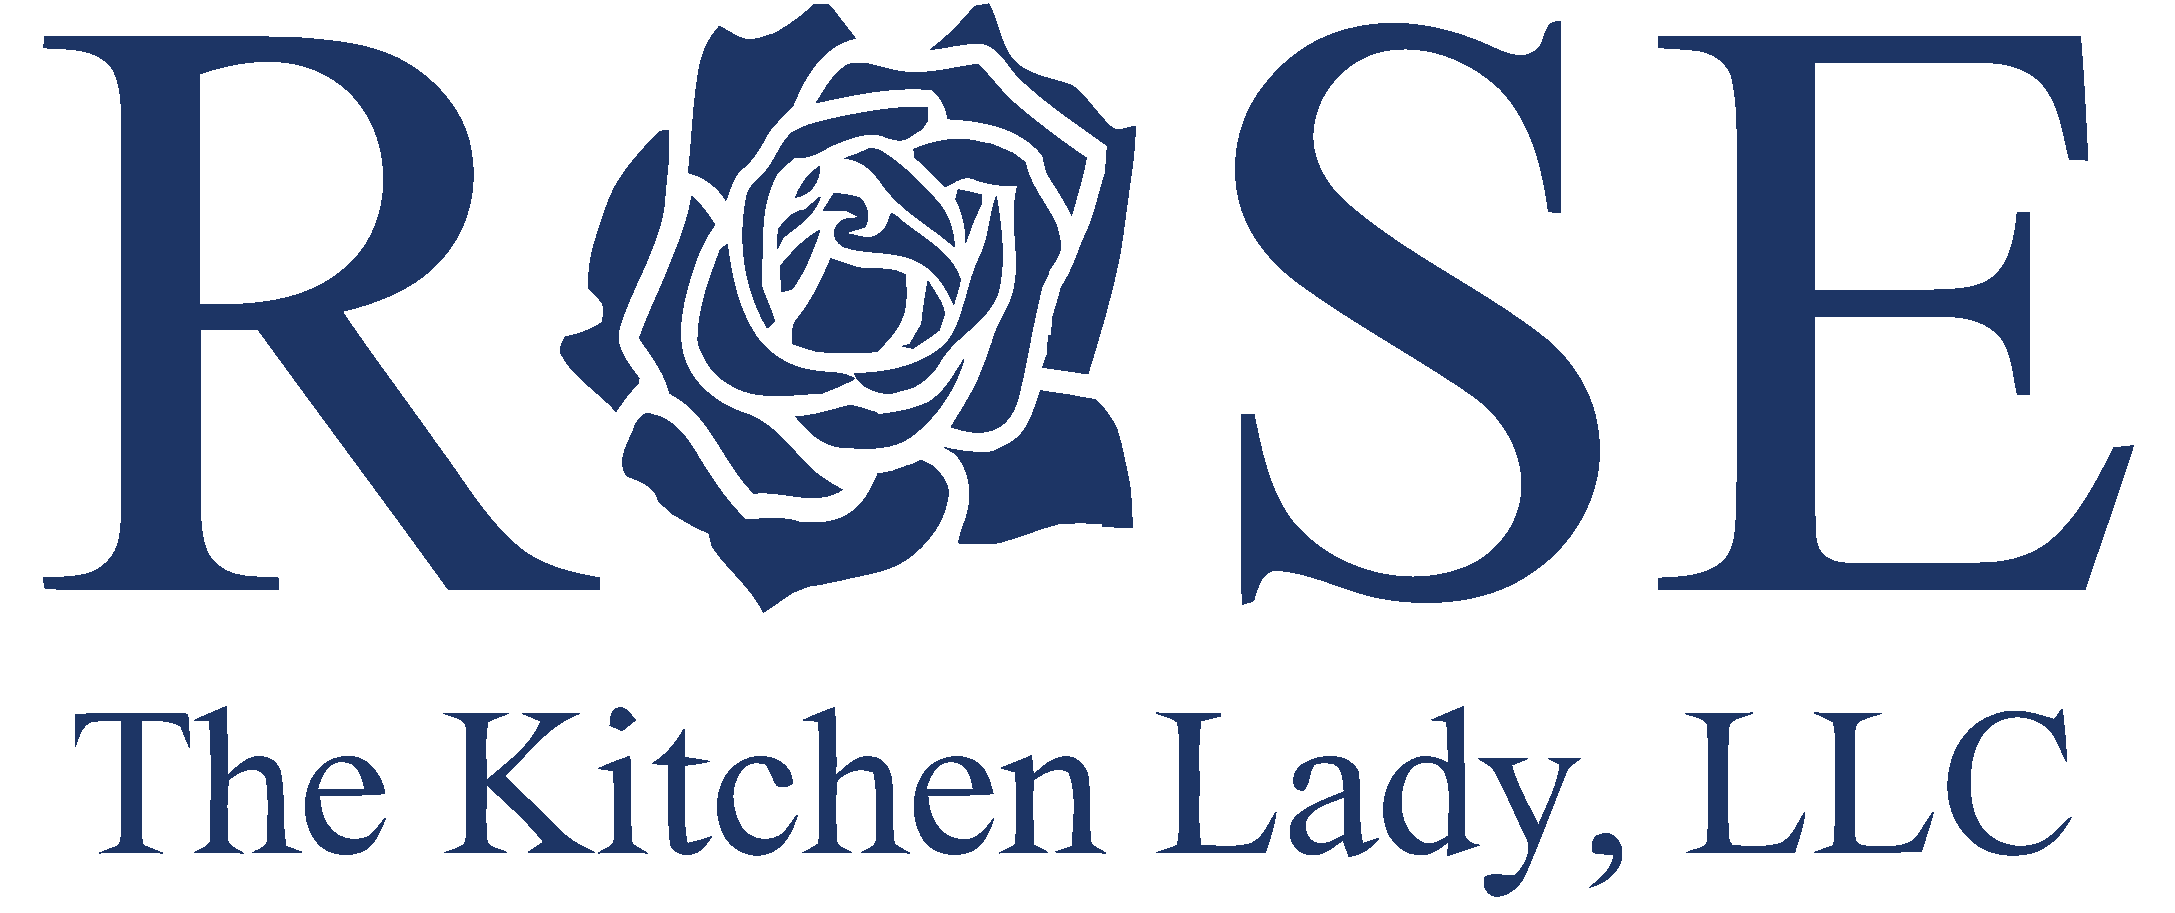 Rose The Kitchen Lady